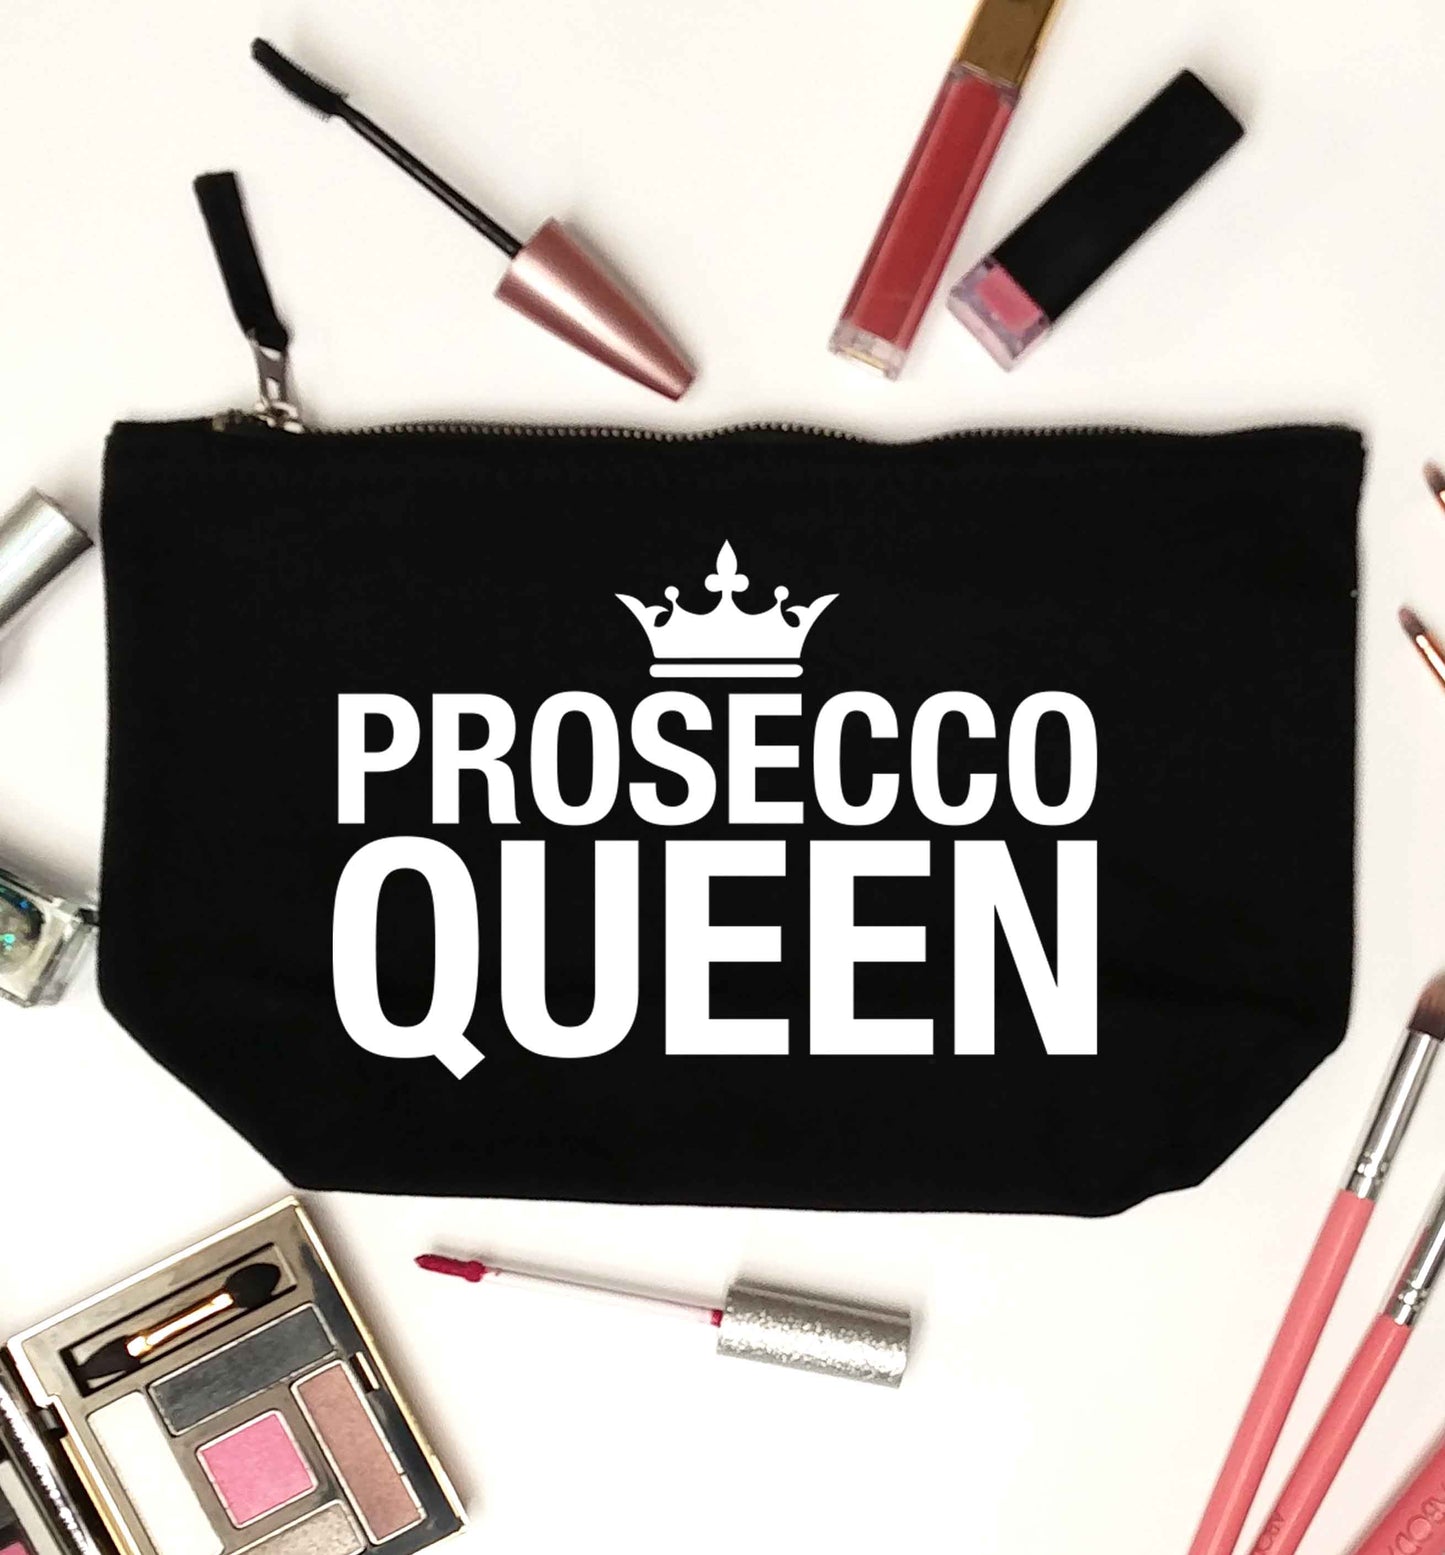 Prosecco queen black makeup bag